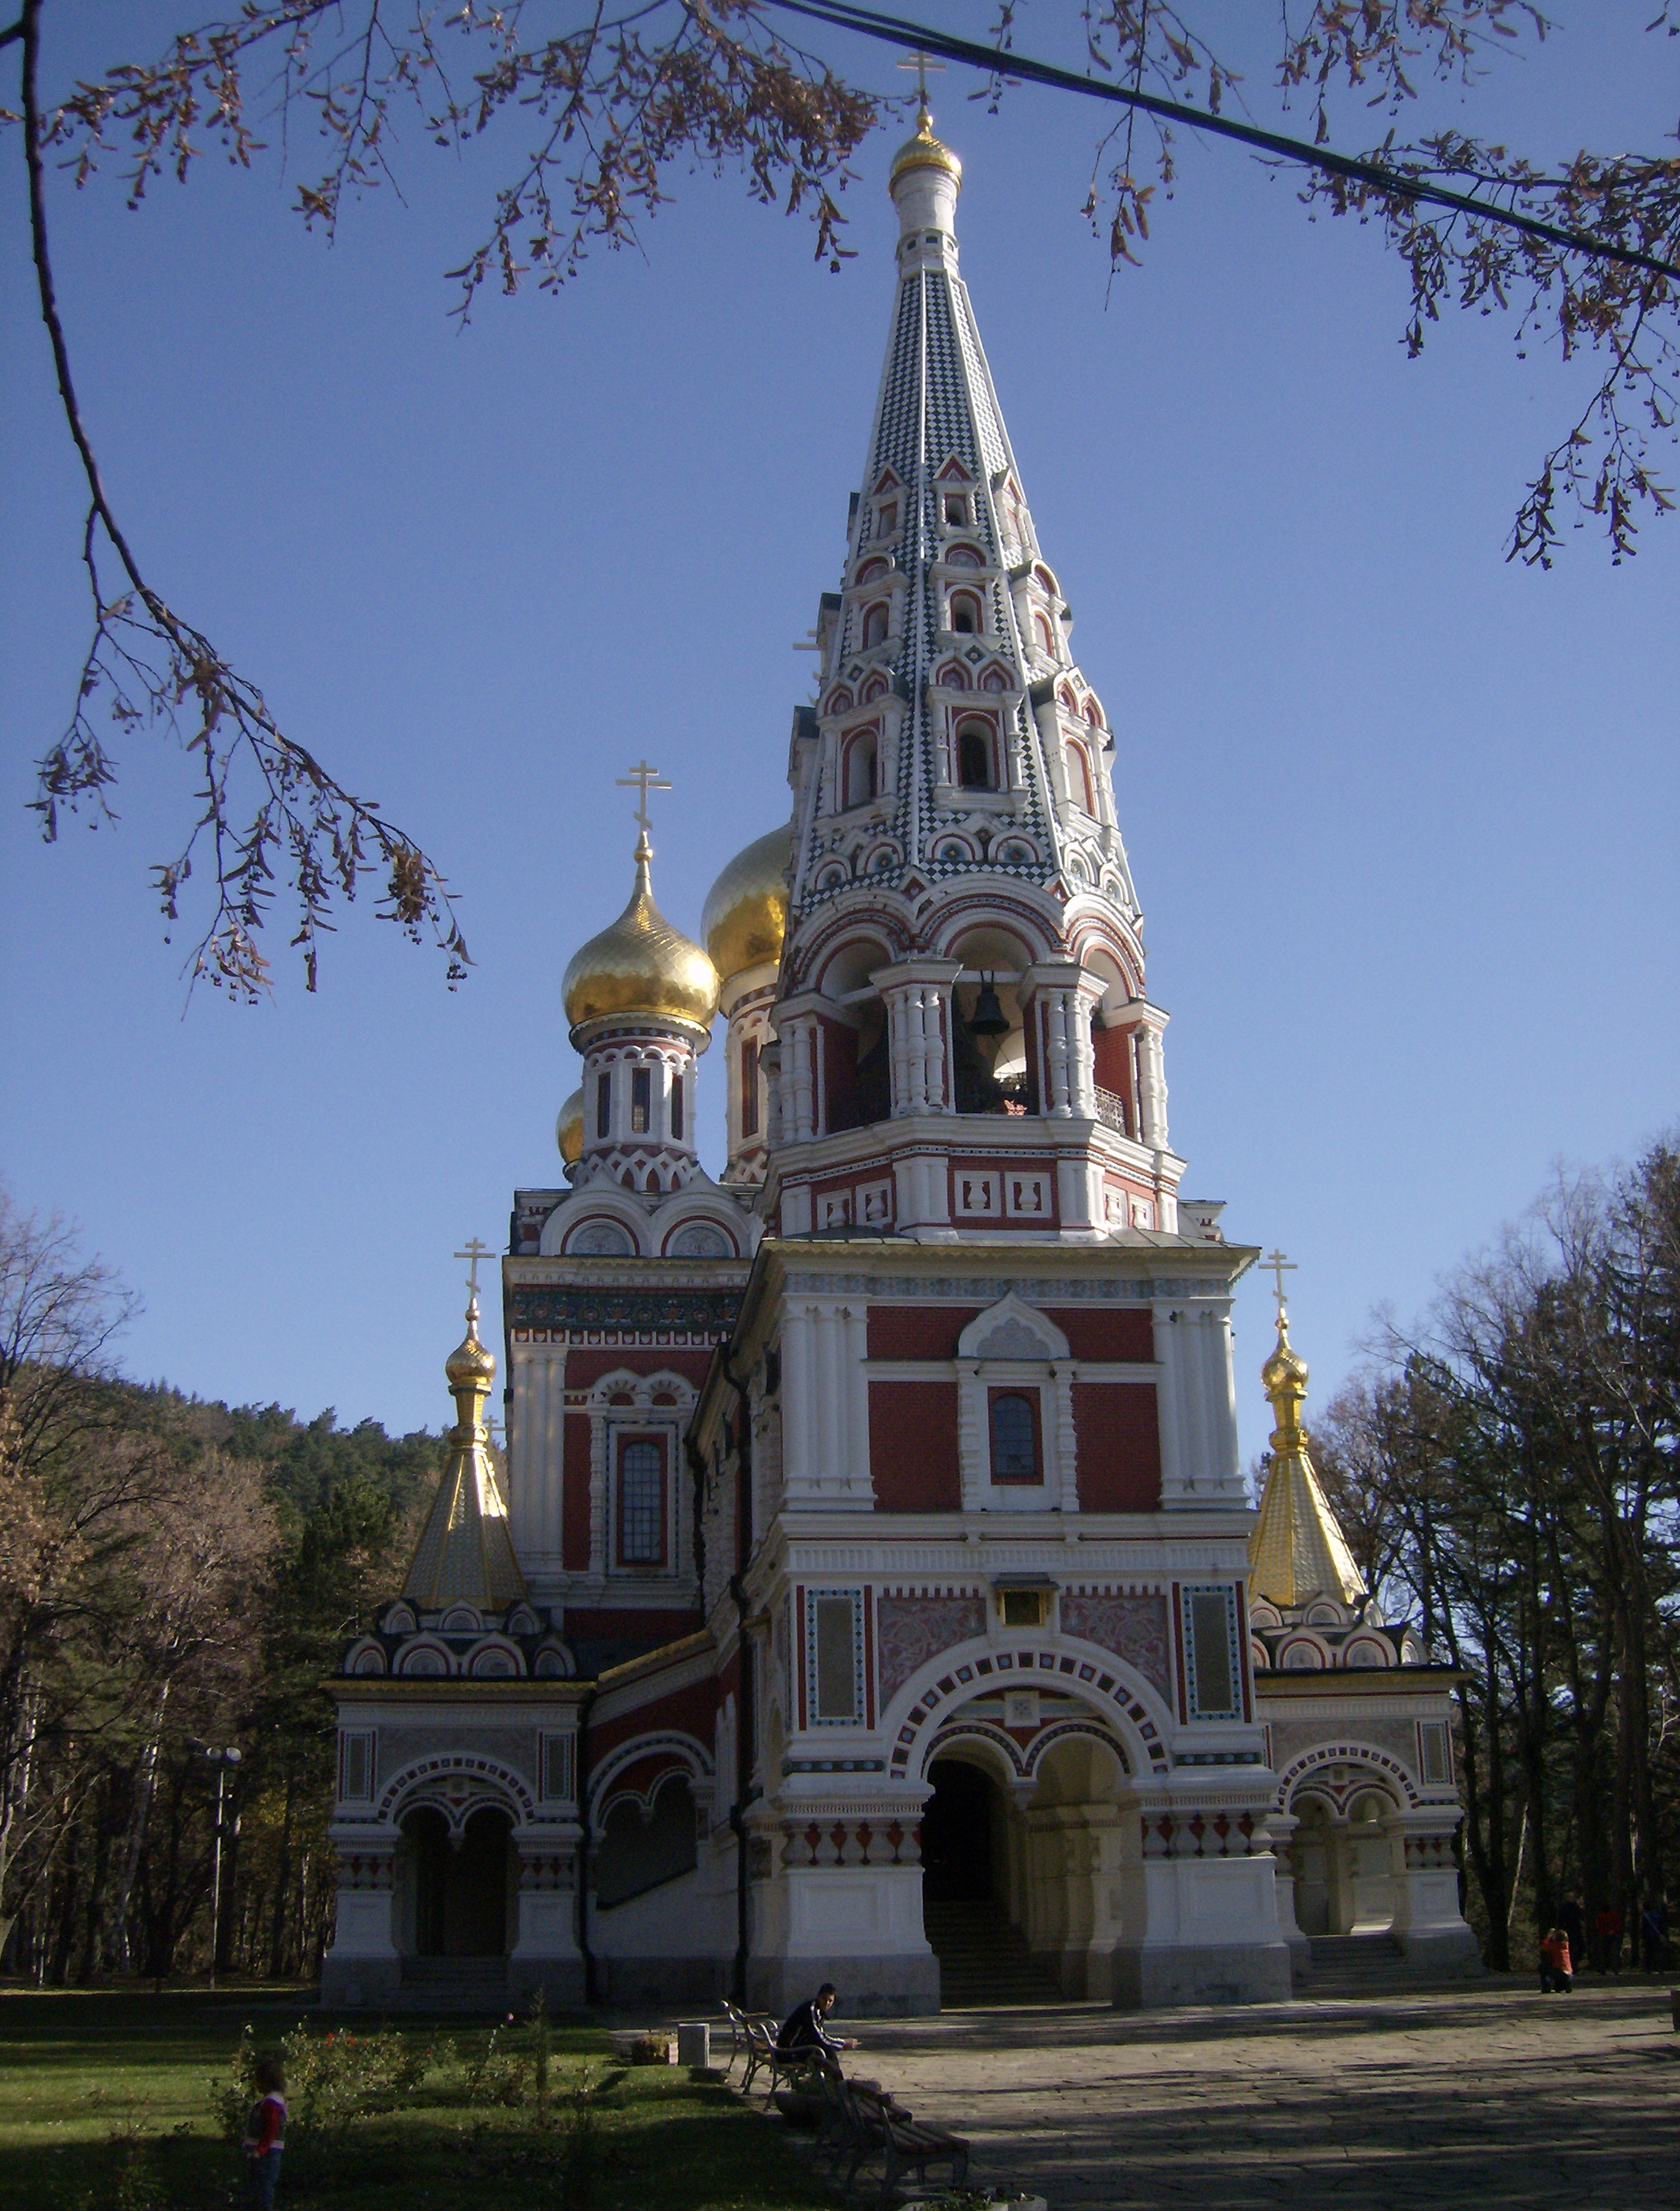 Shipka Memorial Church, Rozhdestvo Hristovo - Birth of Christ cyrkva picture